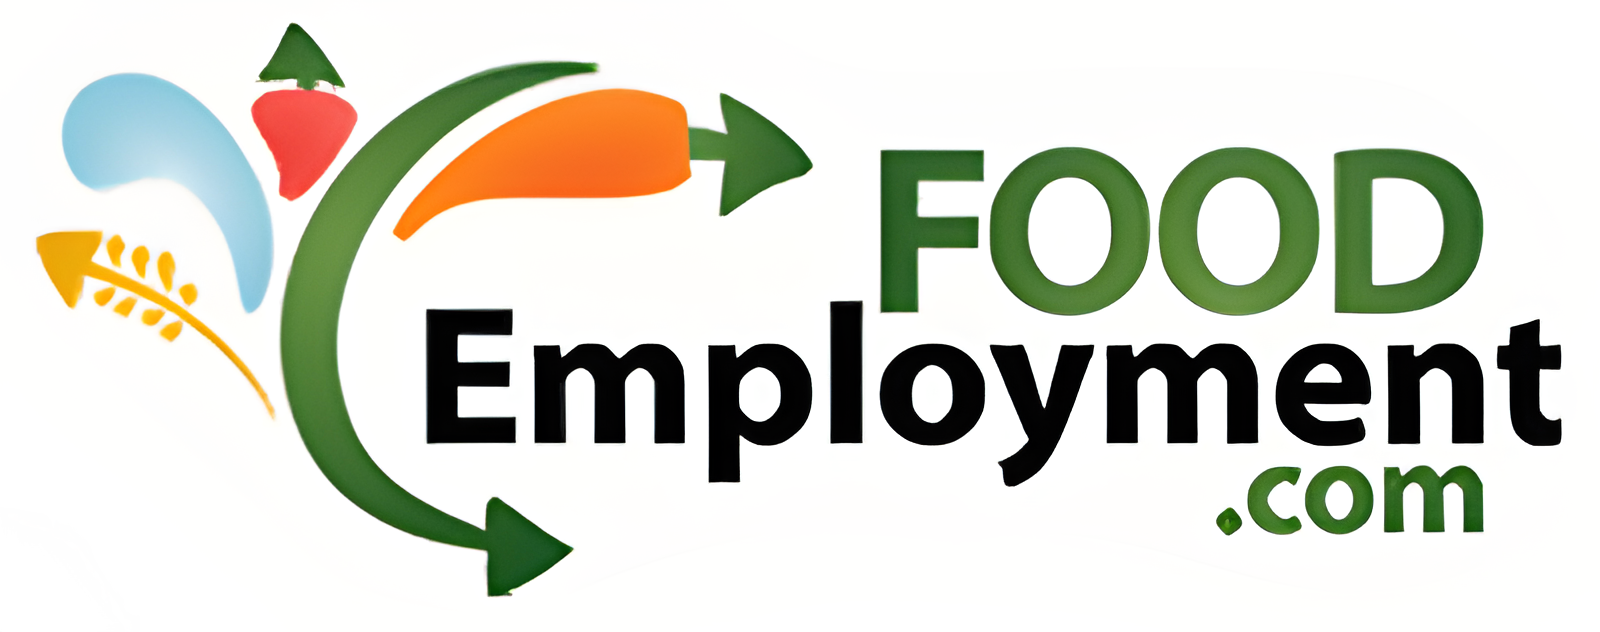 Foodemployment.com logo